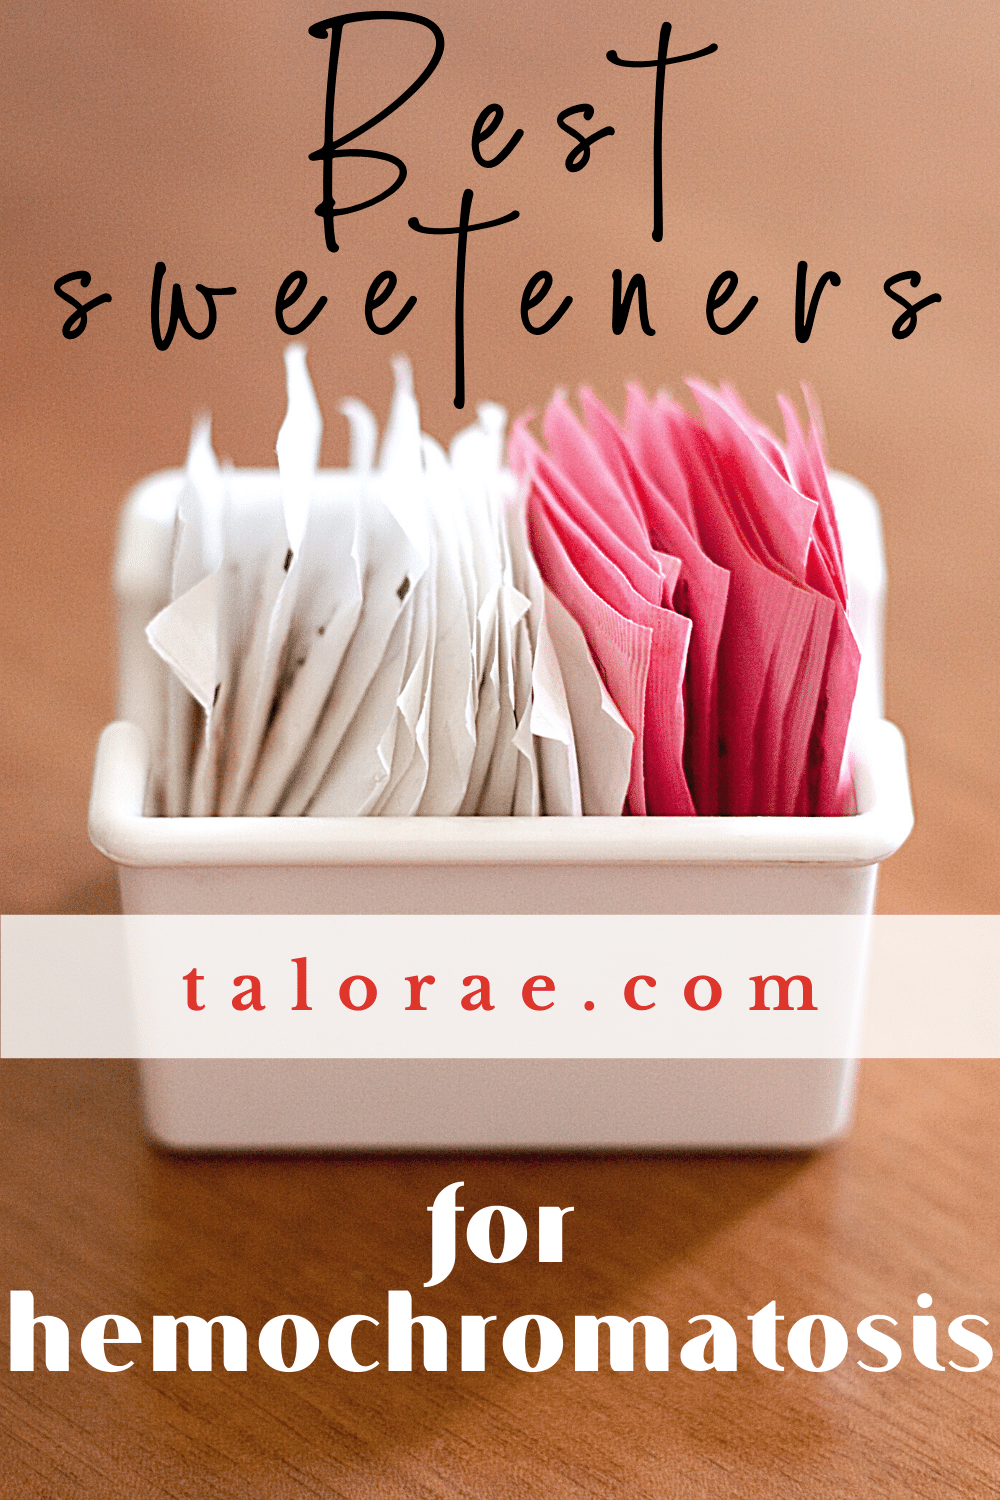 Best sweeteners for hemochromatosis - Pinterest graphic